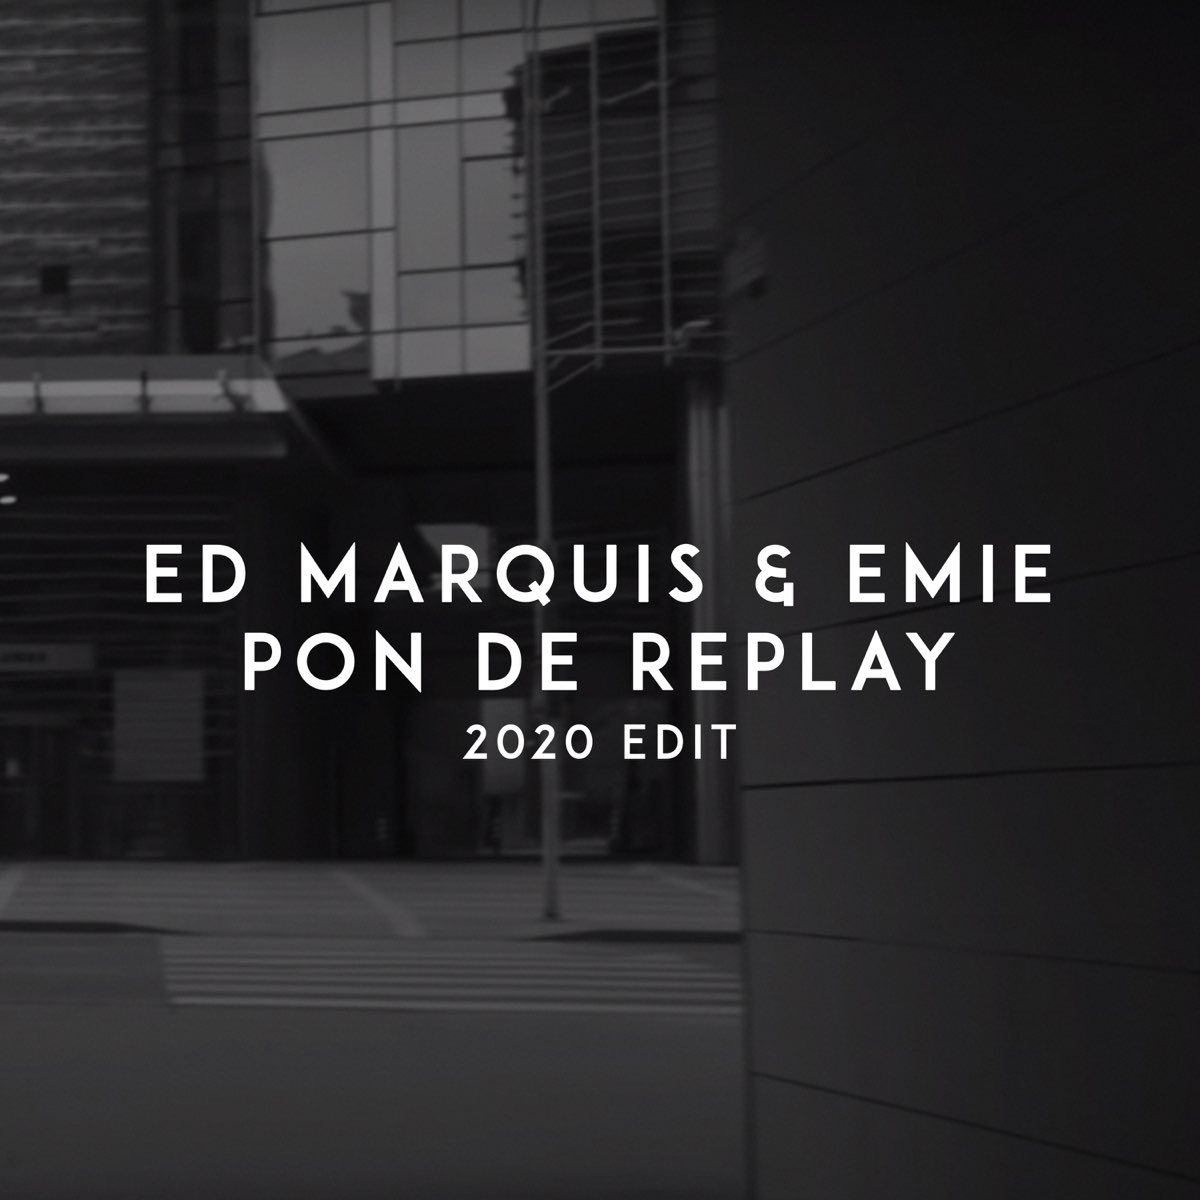 Emie keep on moving. Pon de Replay 2020 Edit ed Marquis, Emie. Ed Marquis, Emie. Ed Marquis, Emie - Pon de Replay. Ed Marquis .feat Emie - Pon de Replay.